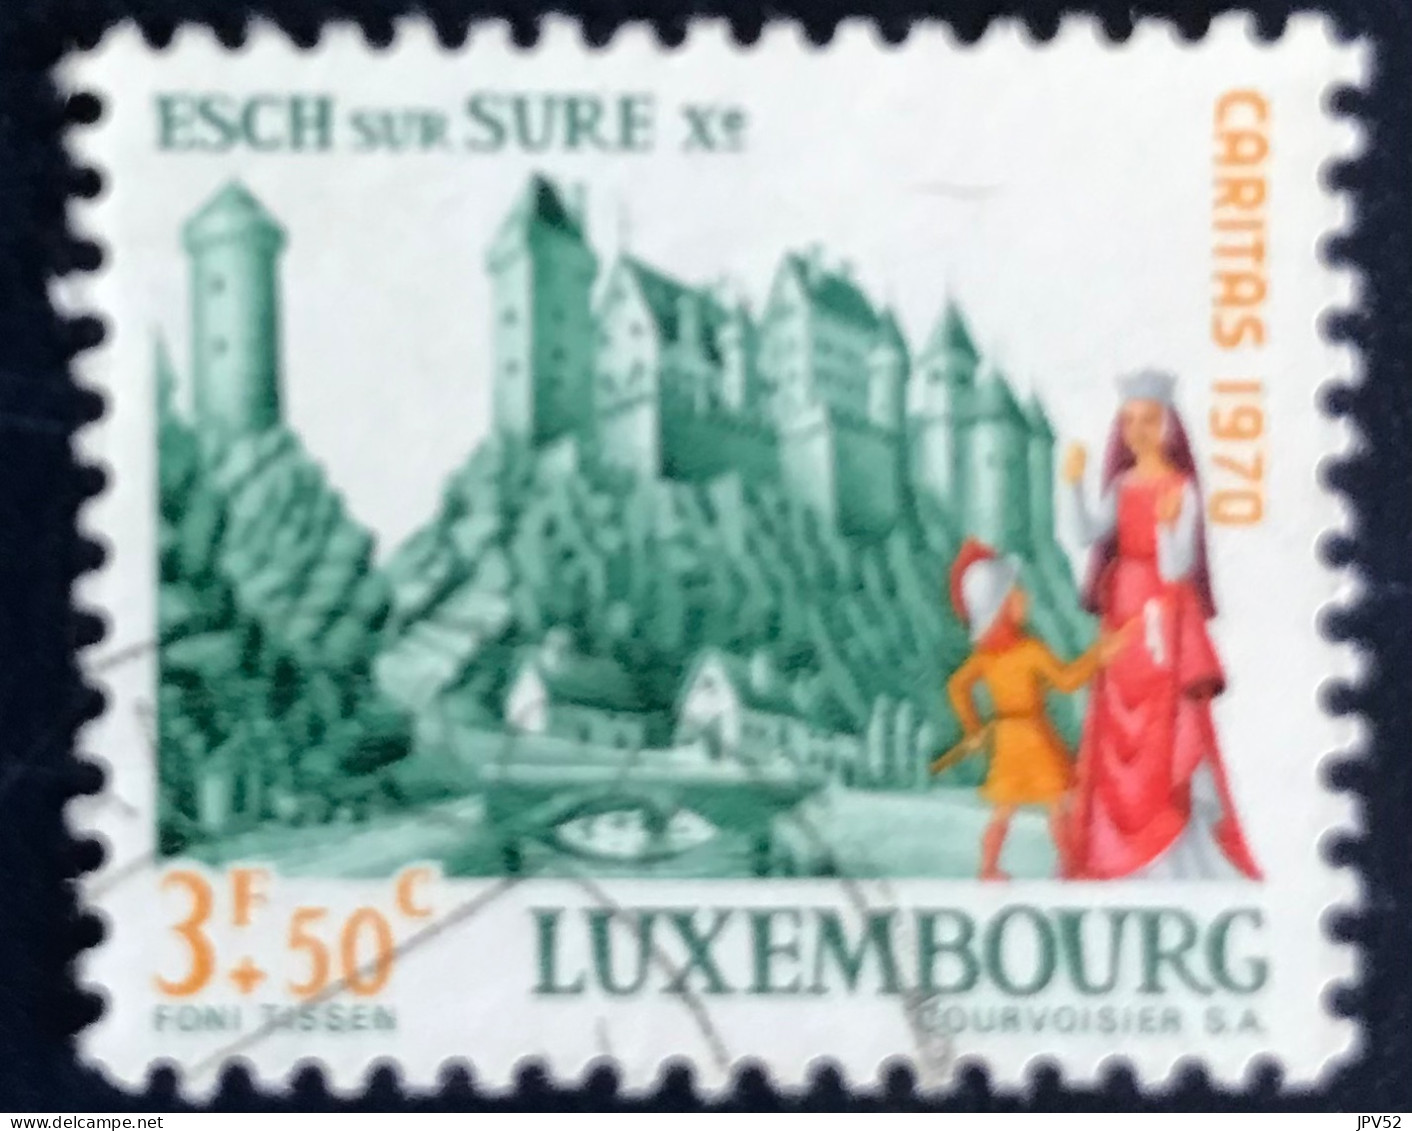 Luxembourg - Luxemburg - C18/34 - 1970 - (°)used - Michel 817 - Kasteel Esch-sur-Süre - Oblitérés